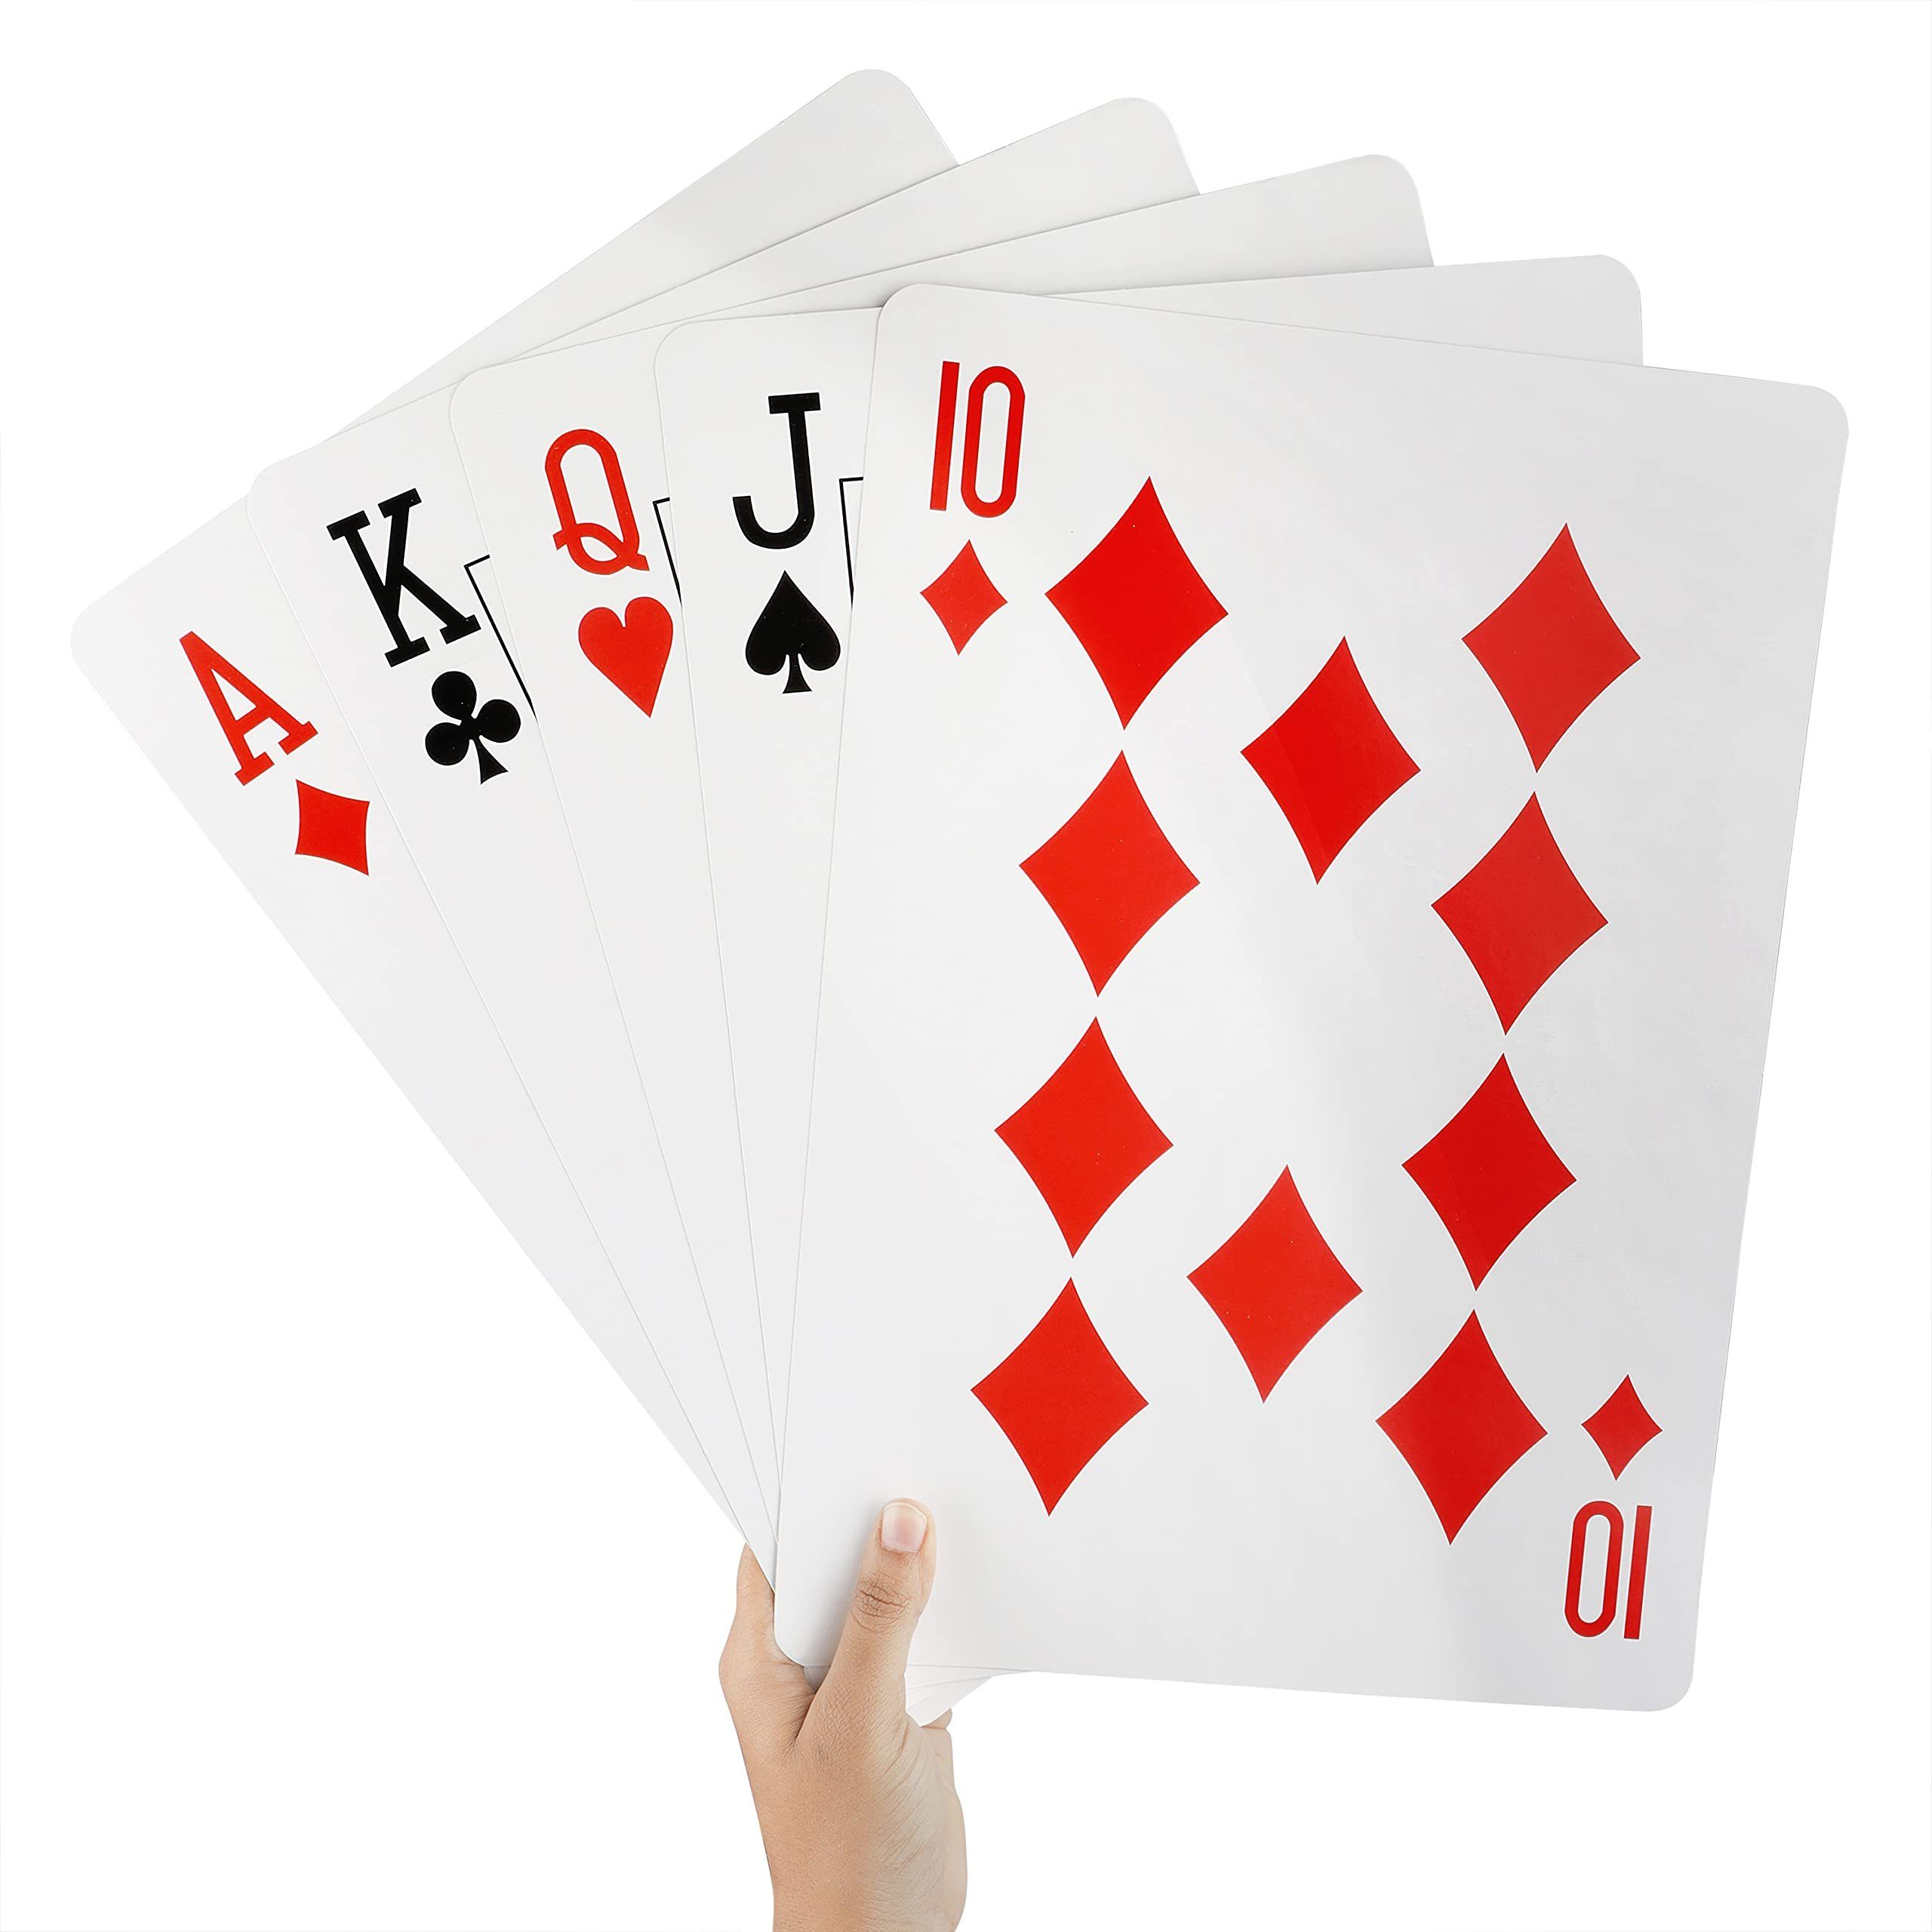 Belle Vous Spiel, Riesige Spielkarten - Großes Kartenset für Familien, Partys und Poker, Jumbo Spielkarten - Riesen Kartenset für Familie, Party und Poker